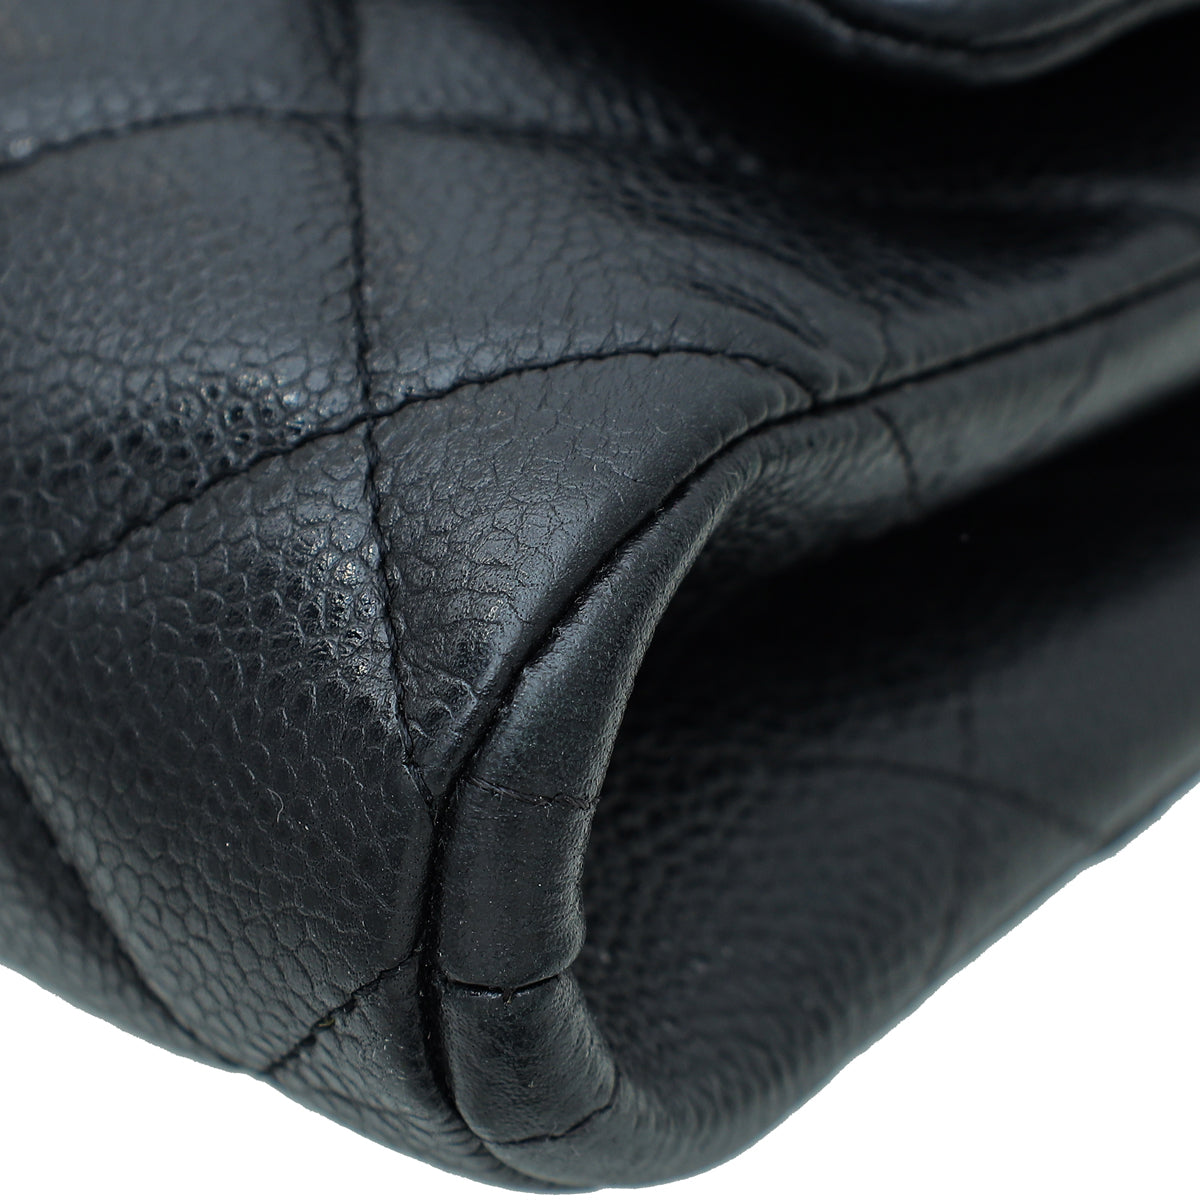 Chanel Black Flap Clutch Bag